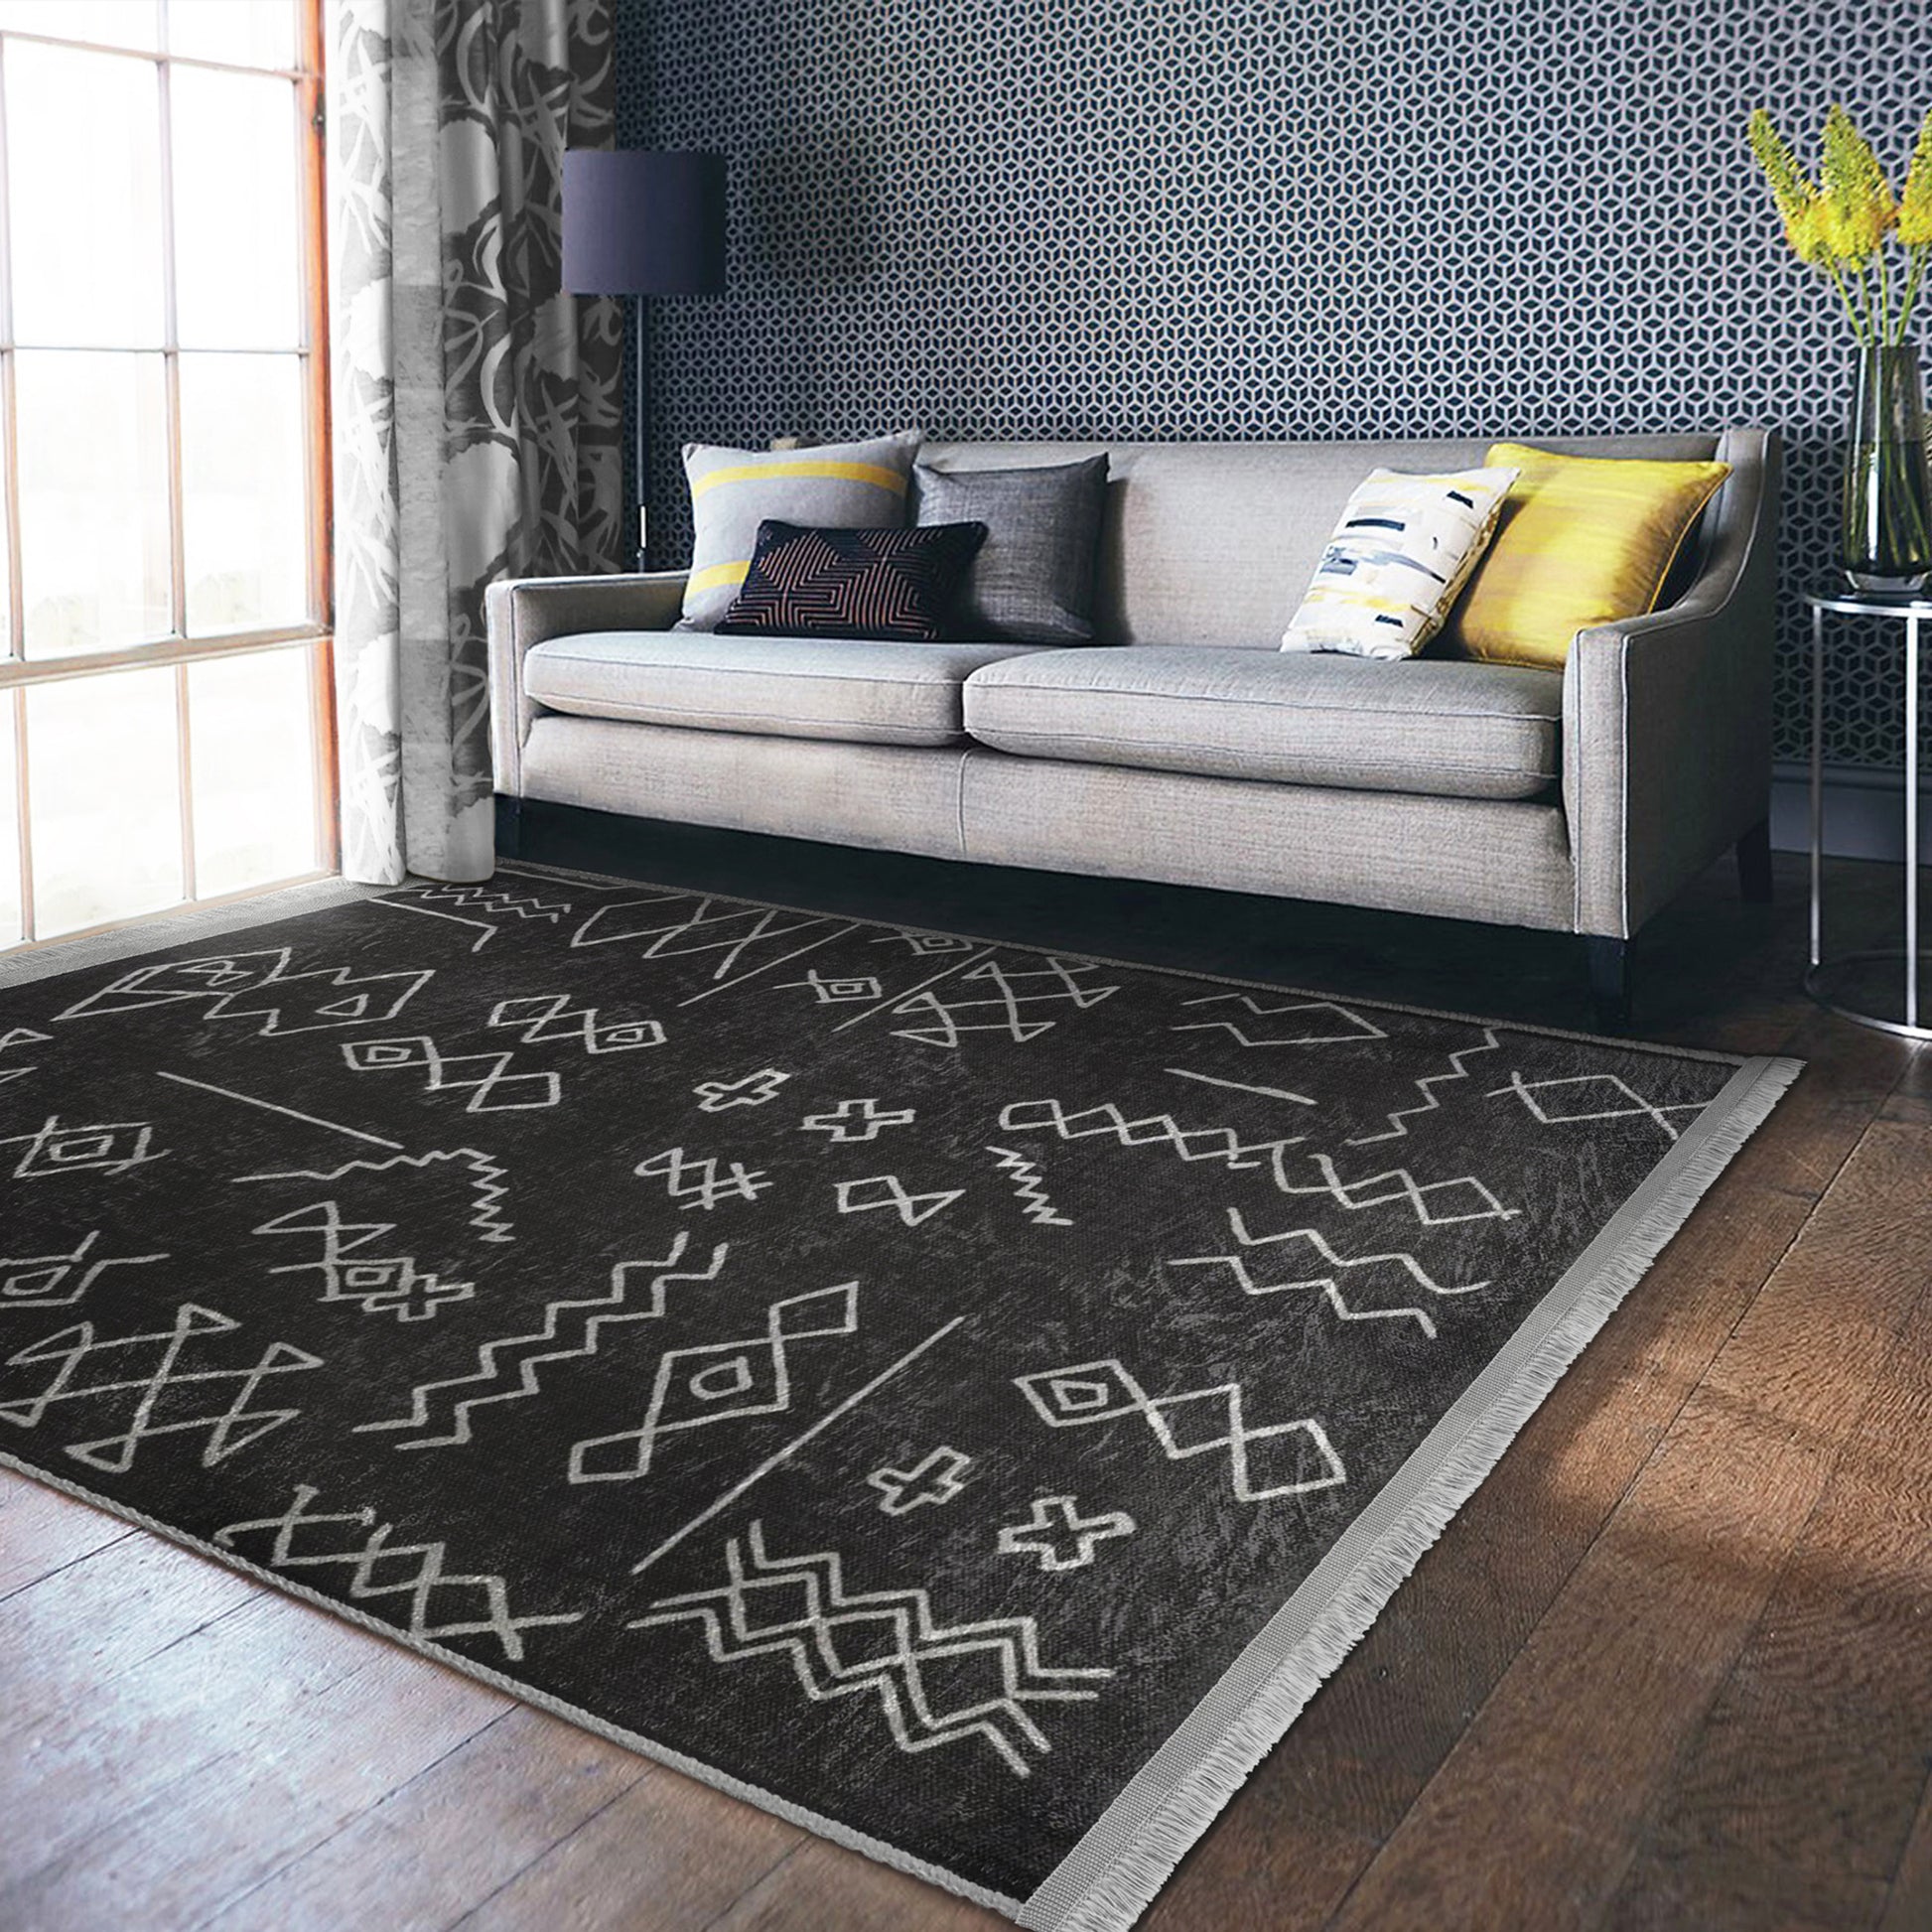 Cozy Aztec Living Room Carpet - Stylish Design